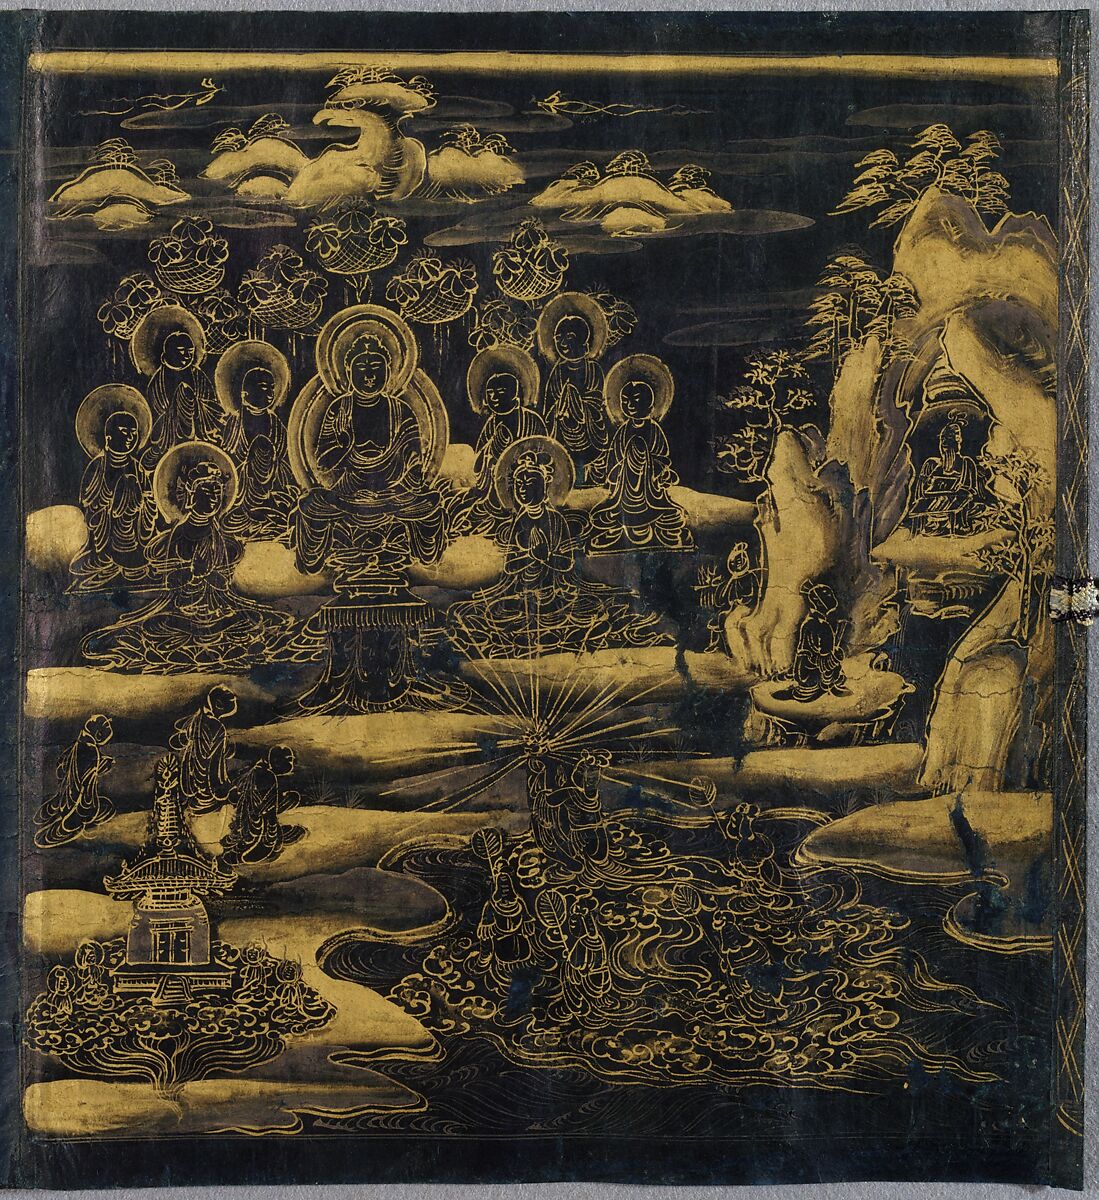 “Devadatta,” Chapter 12 of the Lotus Sutra (Hoke-kyō, Daibadatta-bon), Handscroll; gold and silver on indigo-dyed paper, Japan 